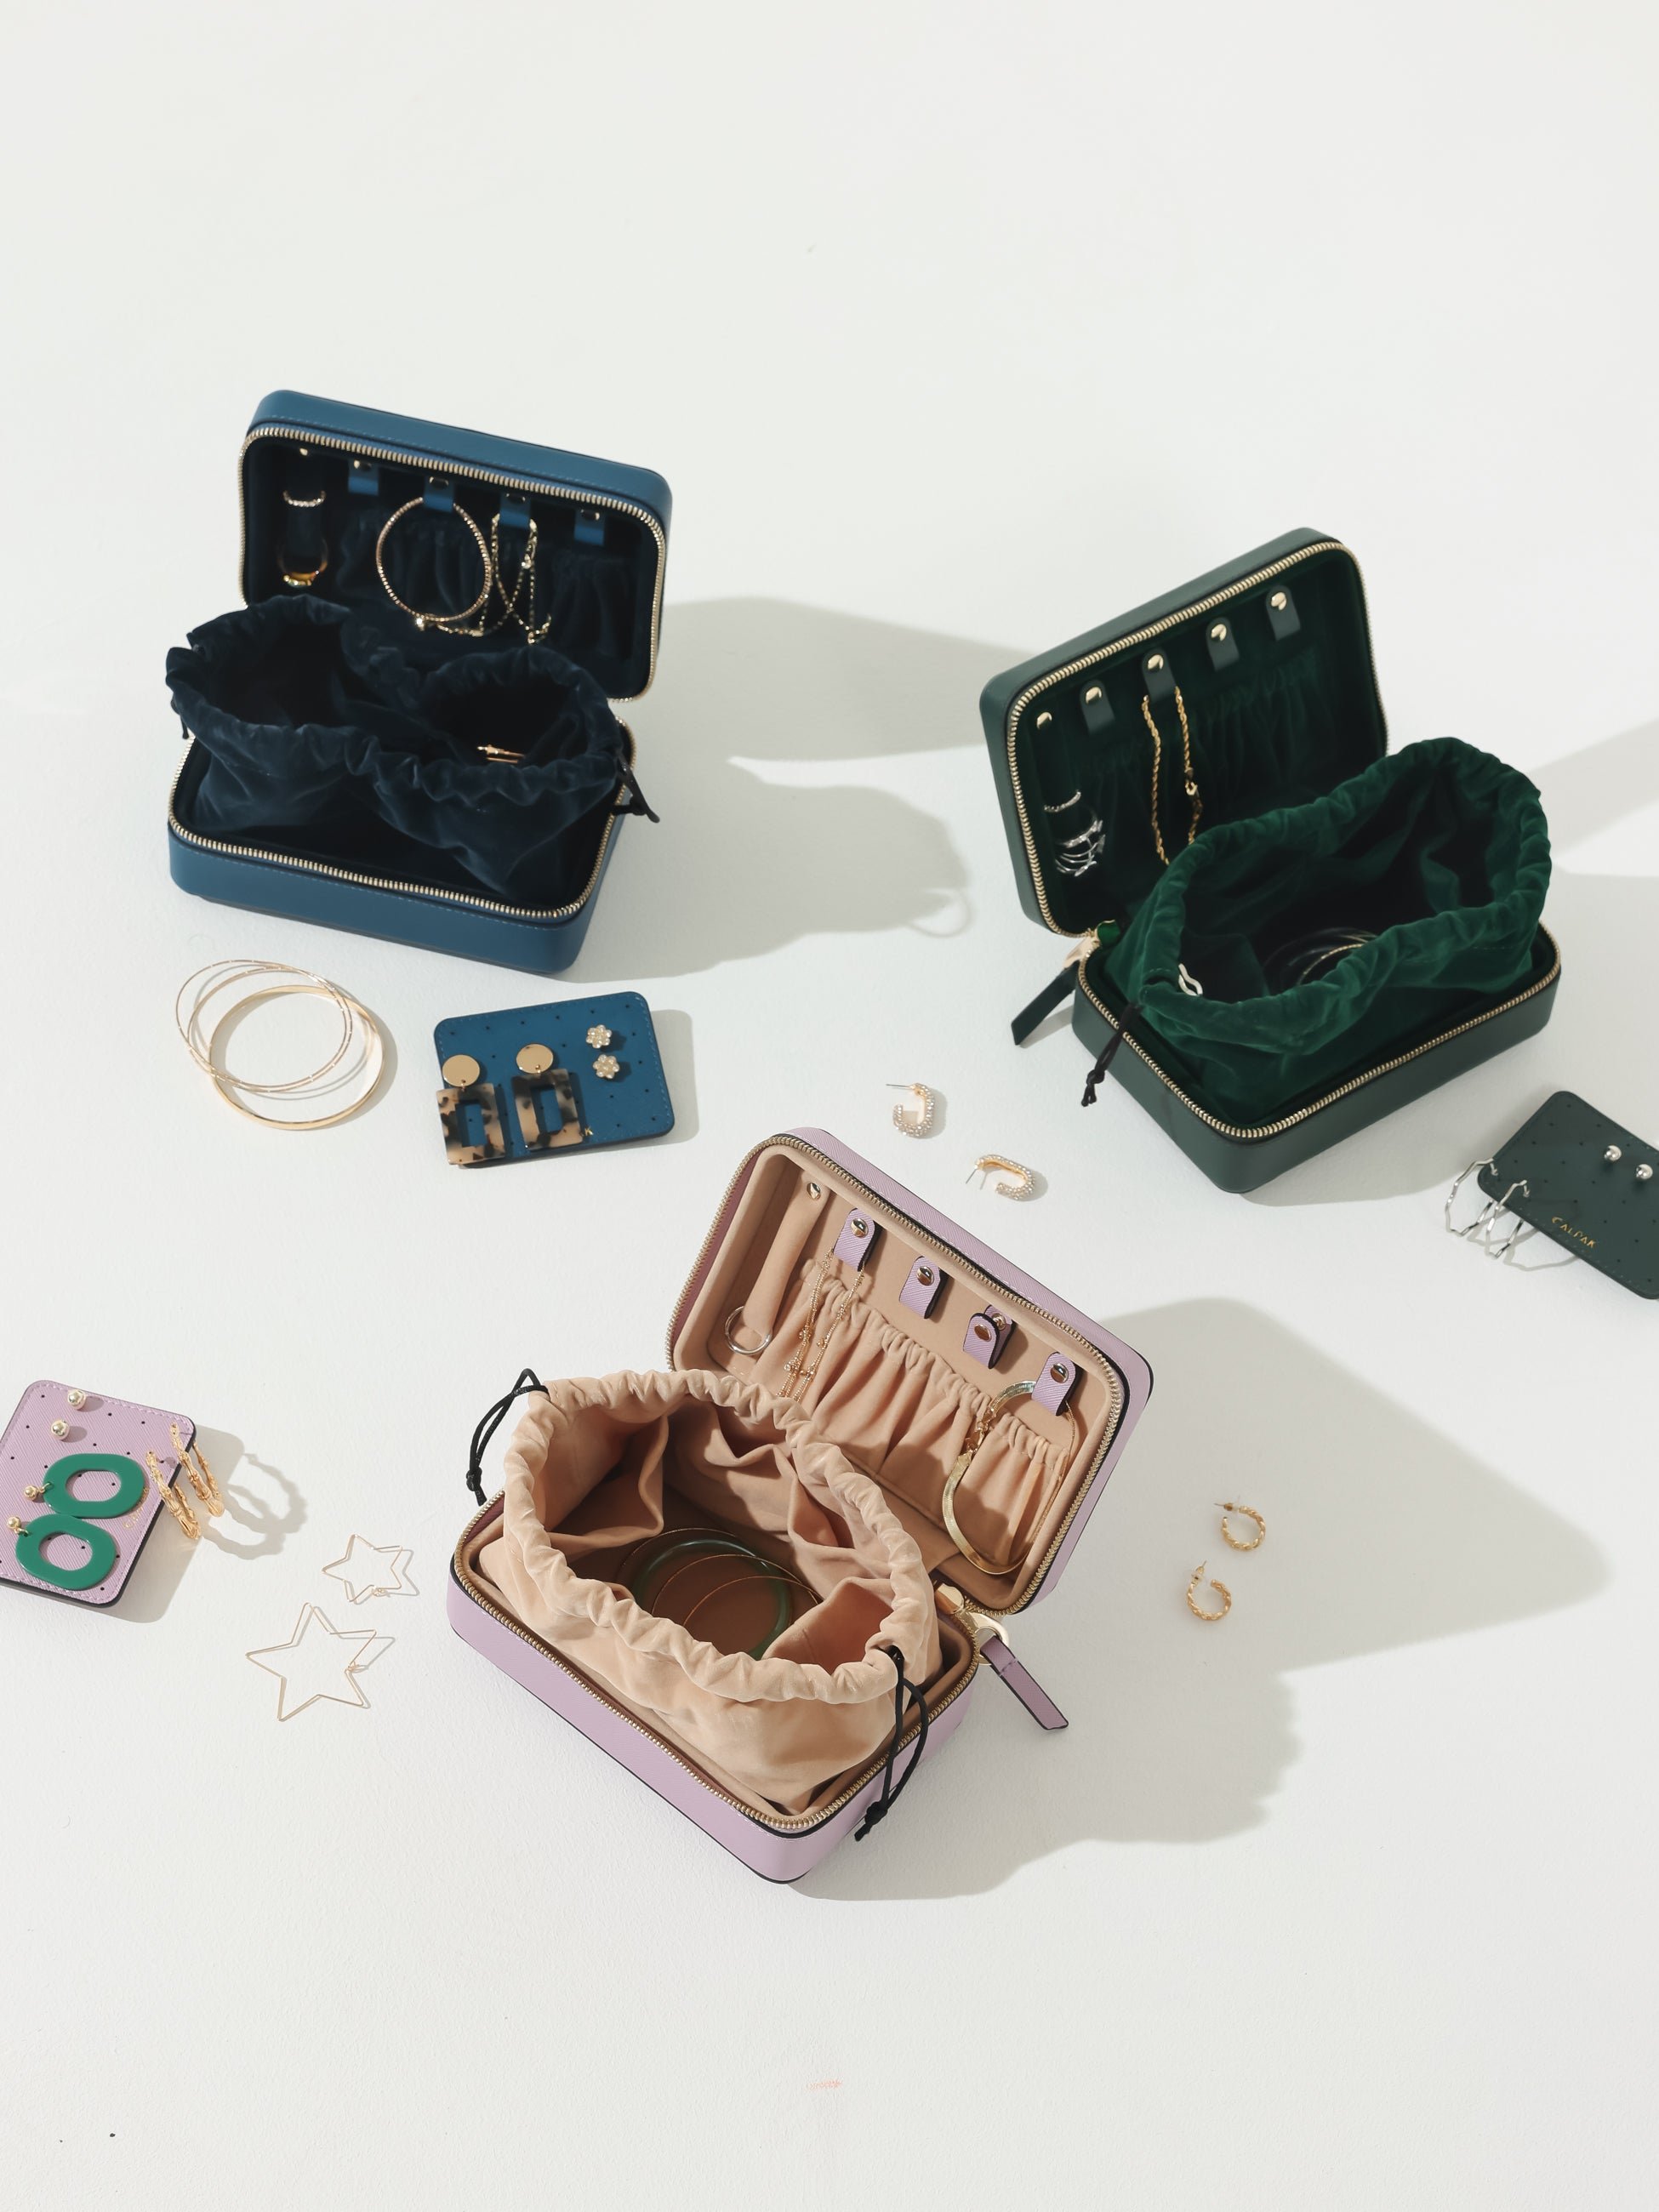 CALPAK zippered jewelry case in deep sea, lavender, and emerald